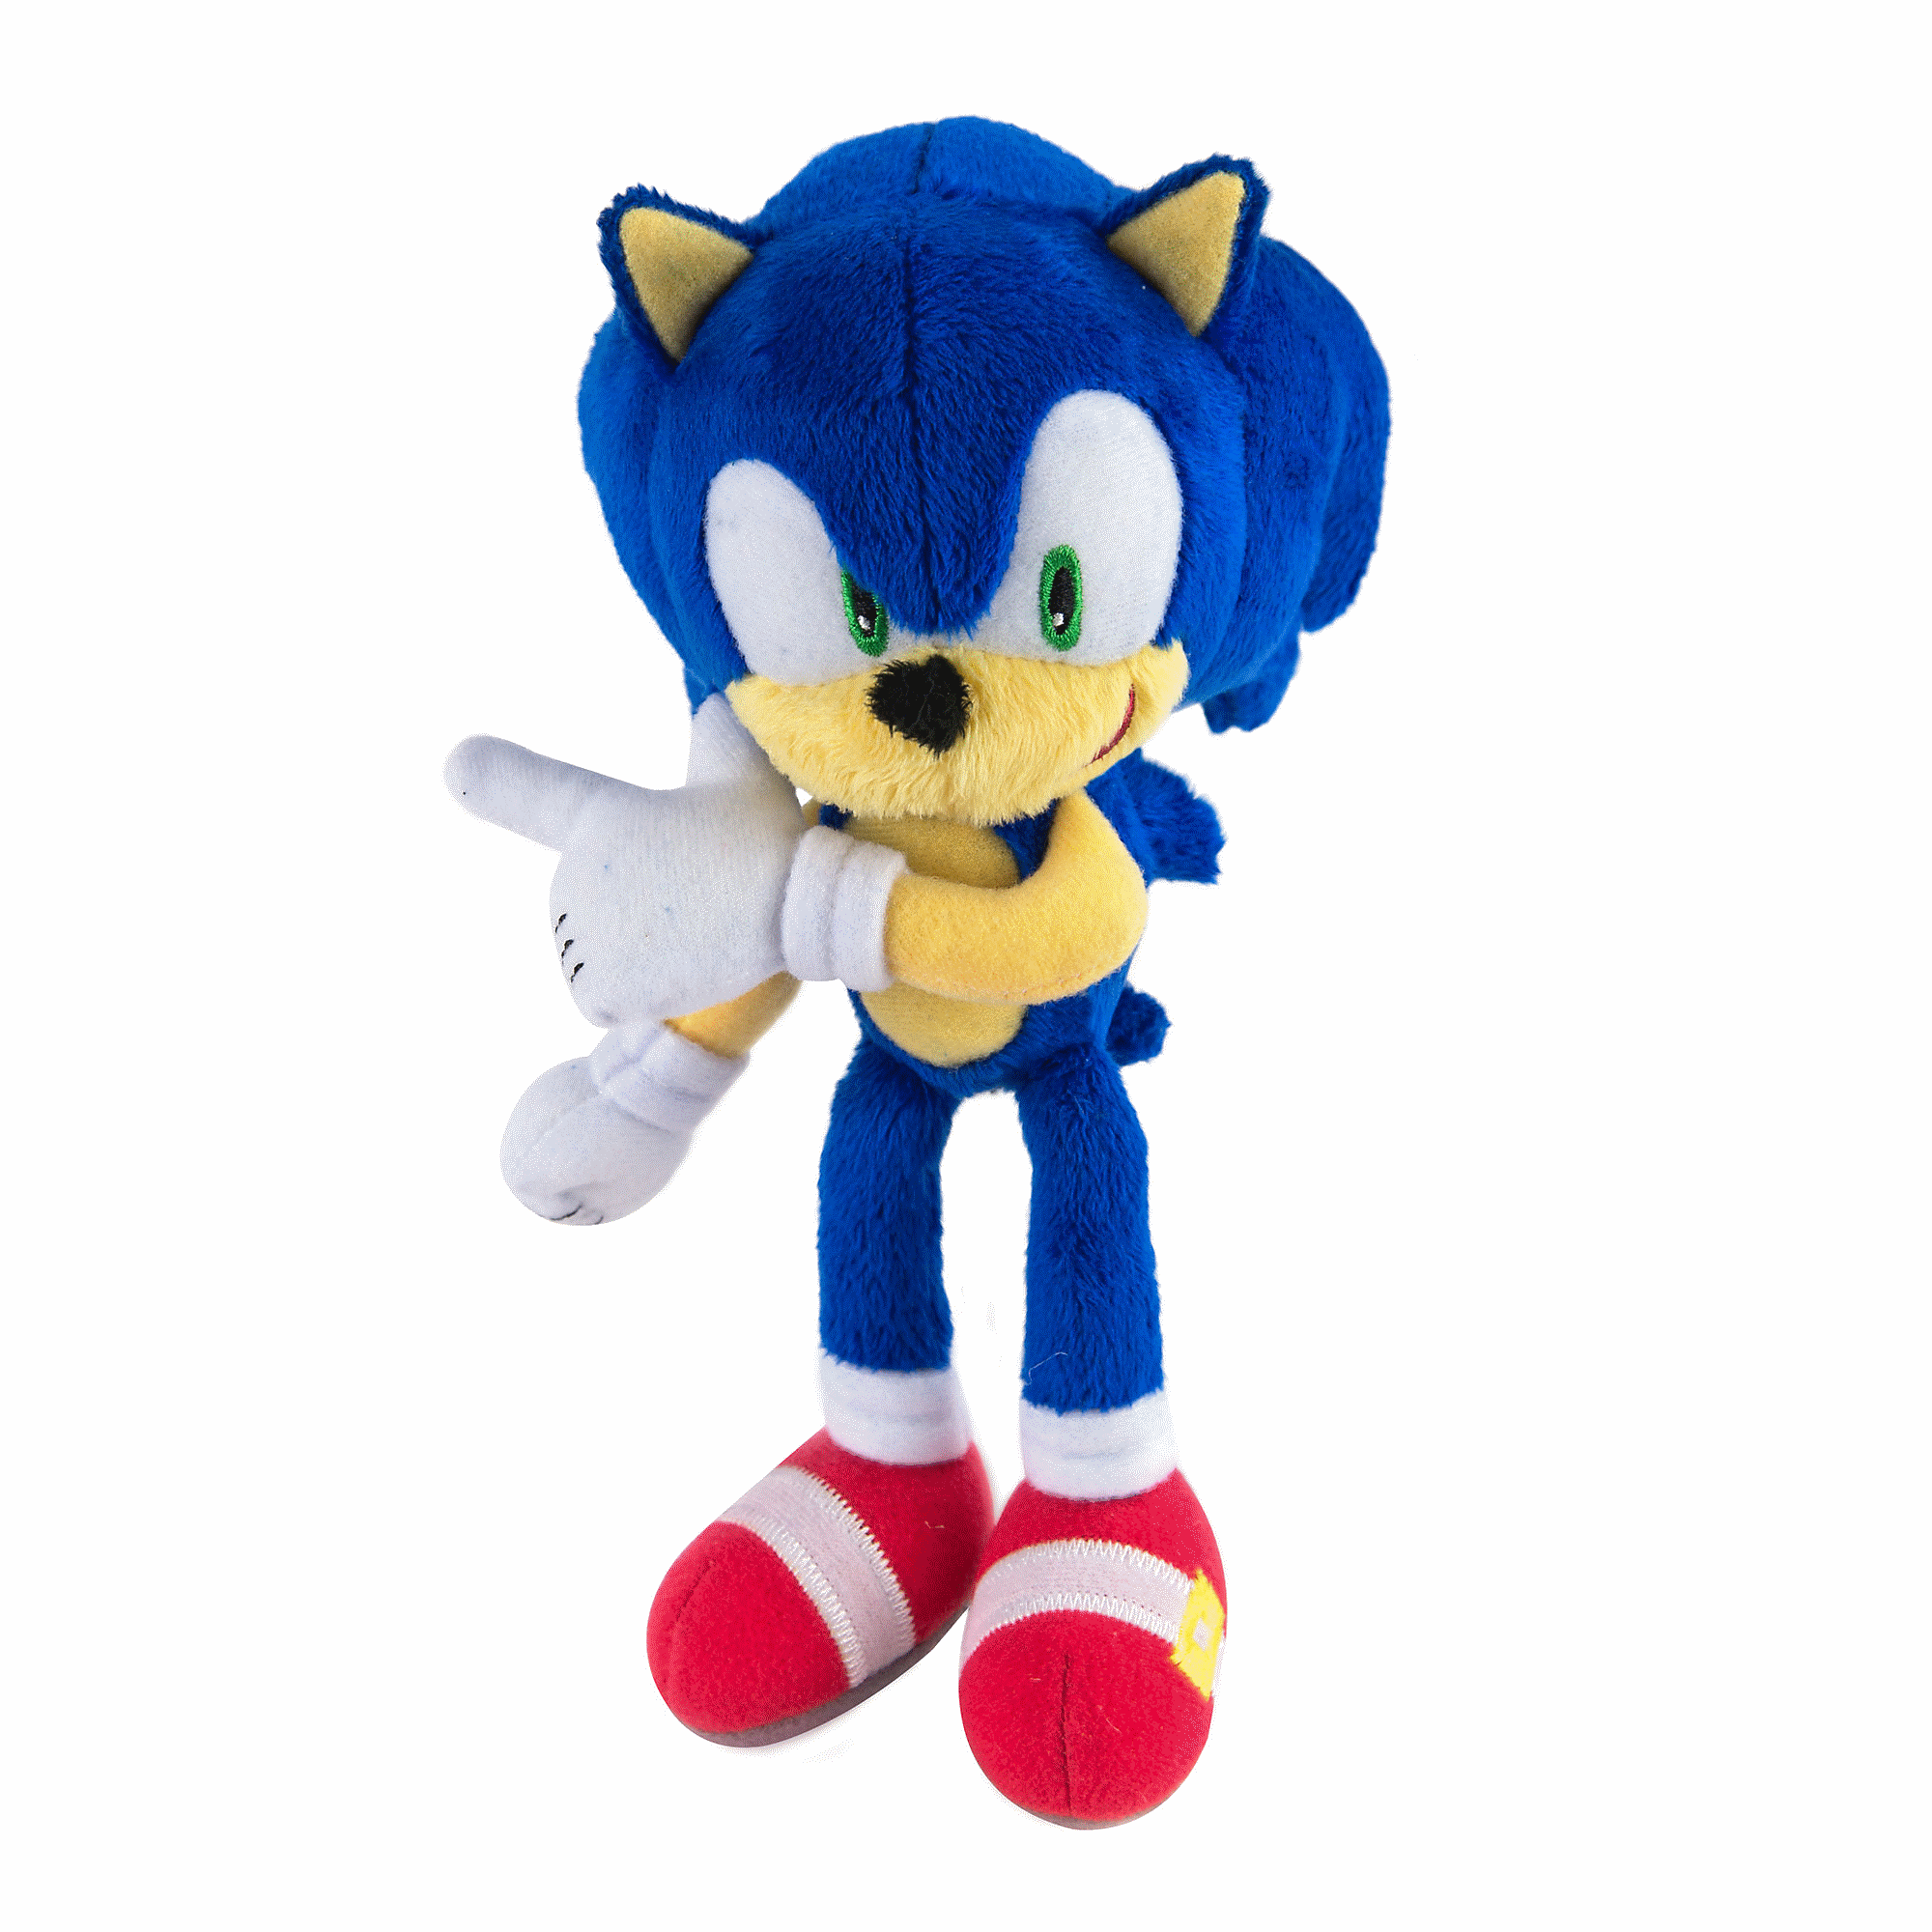 Sonic toys party. Sonic Tomy Plush. Tomy 12 inch Modern Sonic Plush. Соник Sonic the Hedgehog мягкие игрушки. Игрушки Tomy Tomy Sonic Boom.